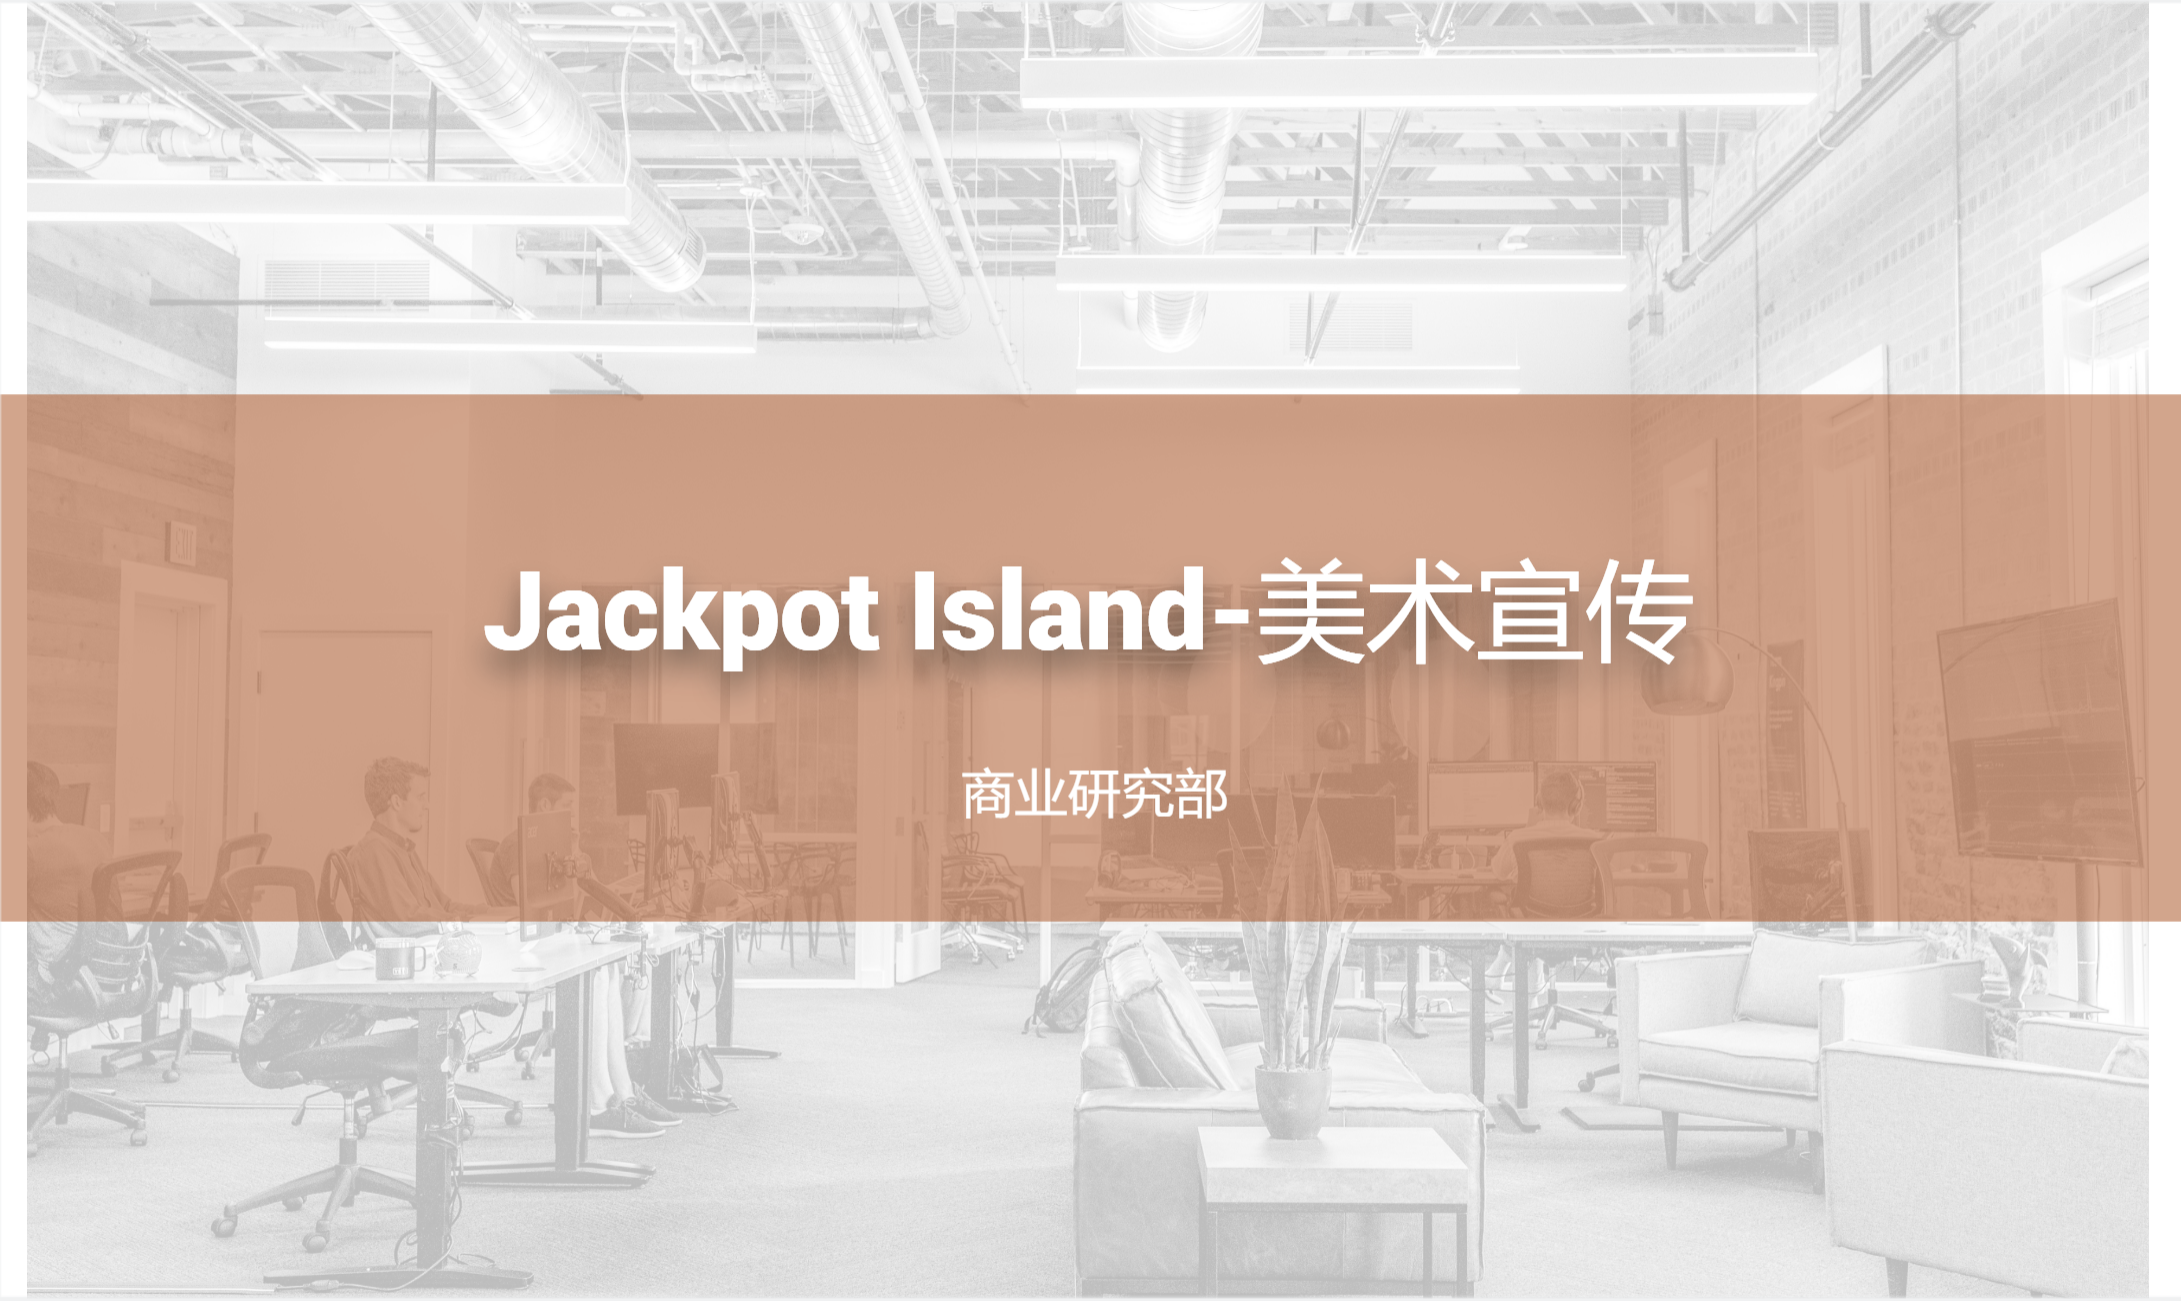 Jackpot Island-美术宣传